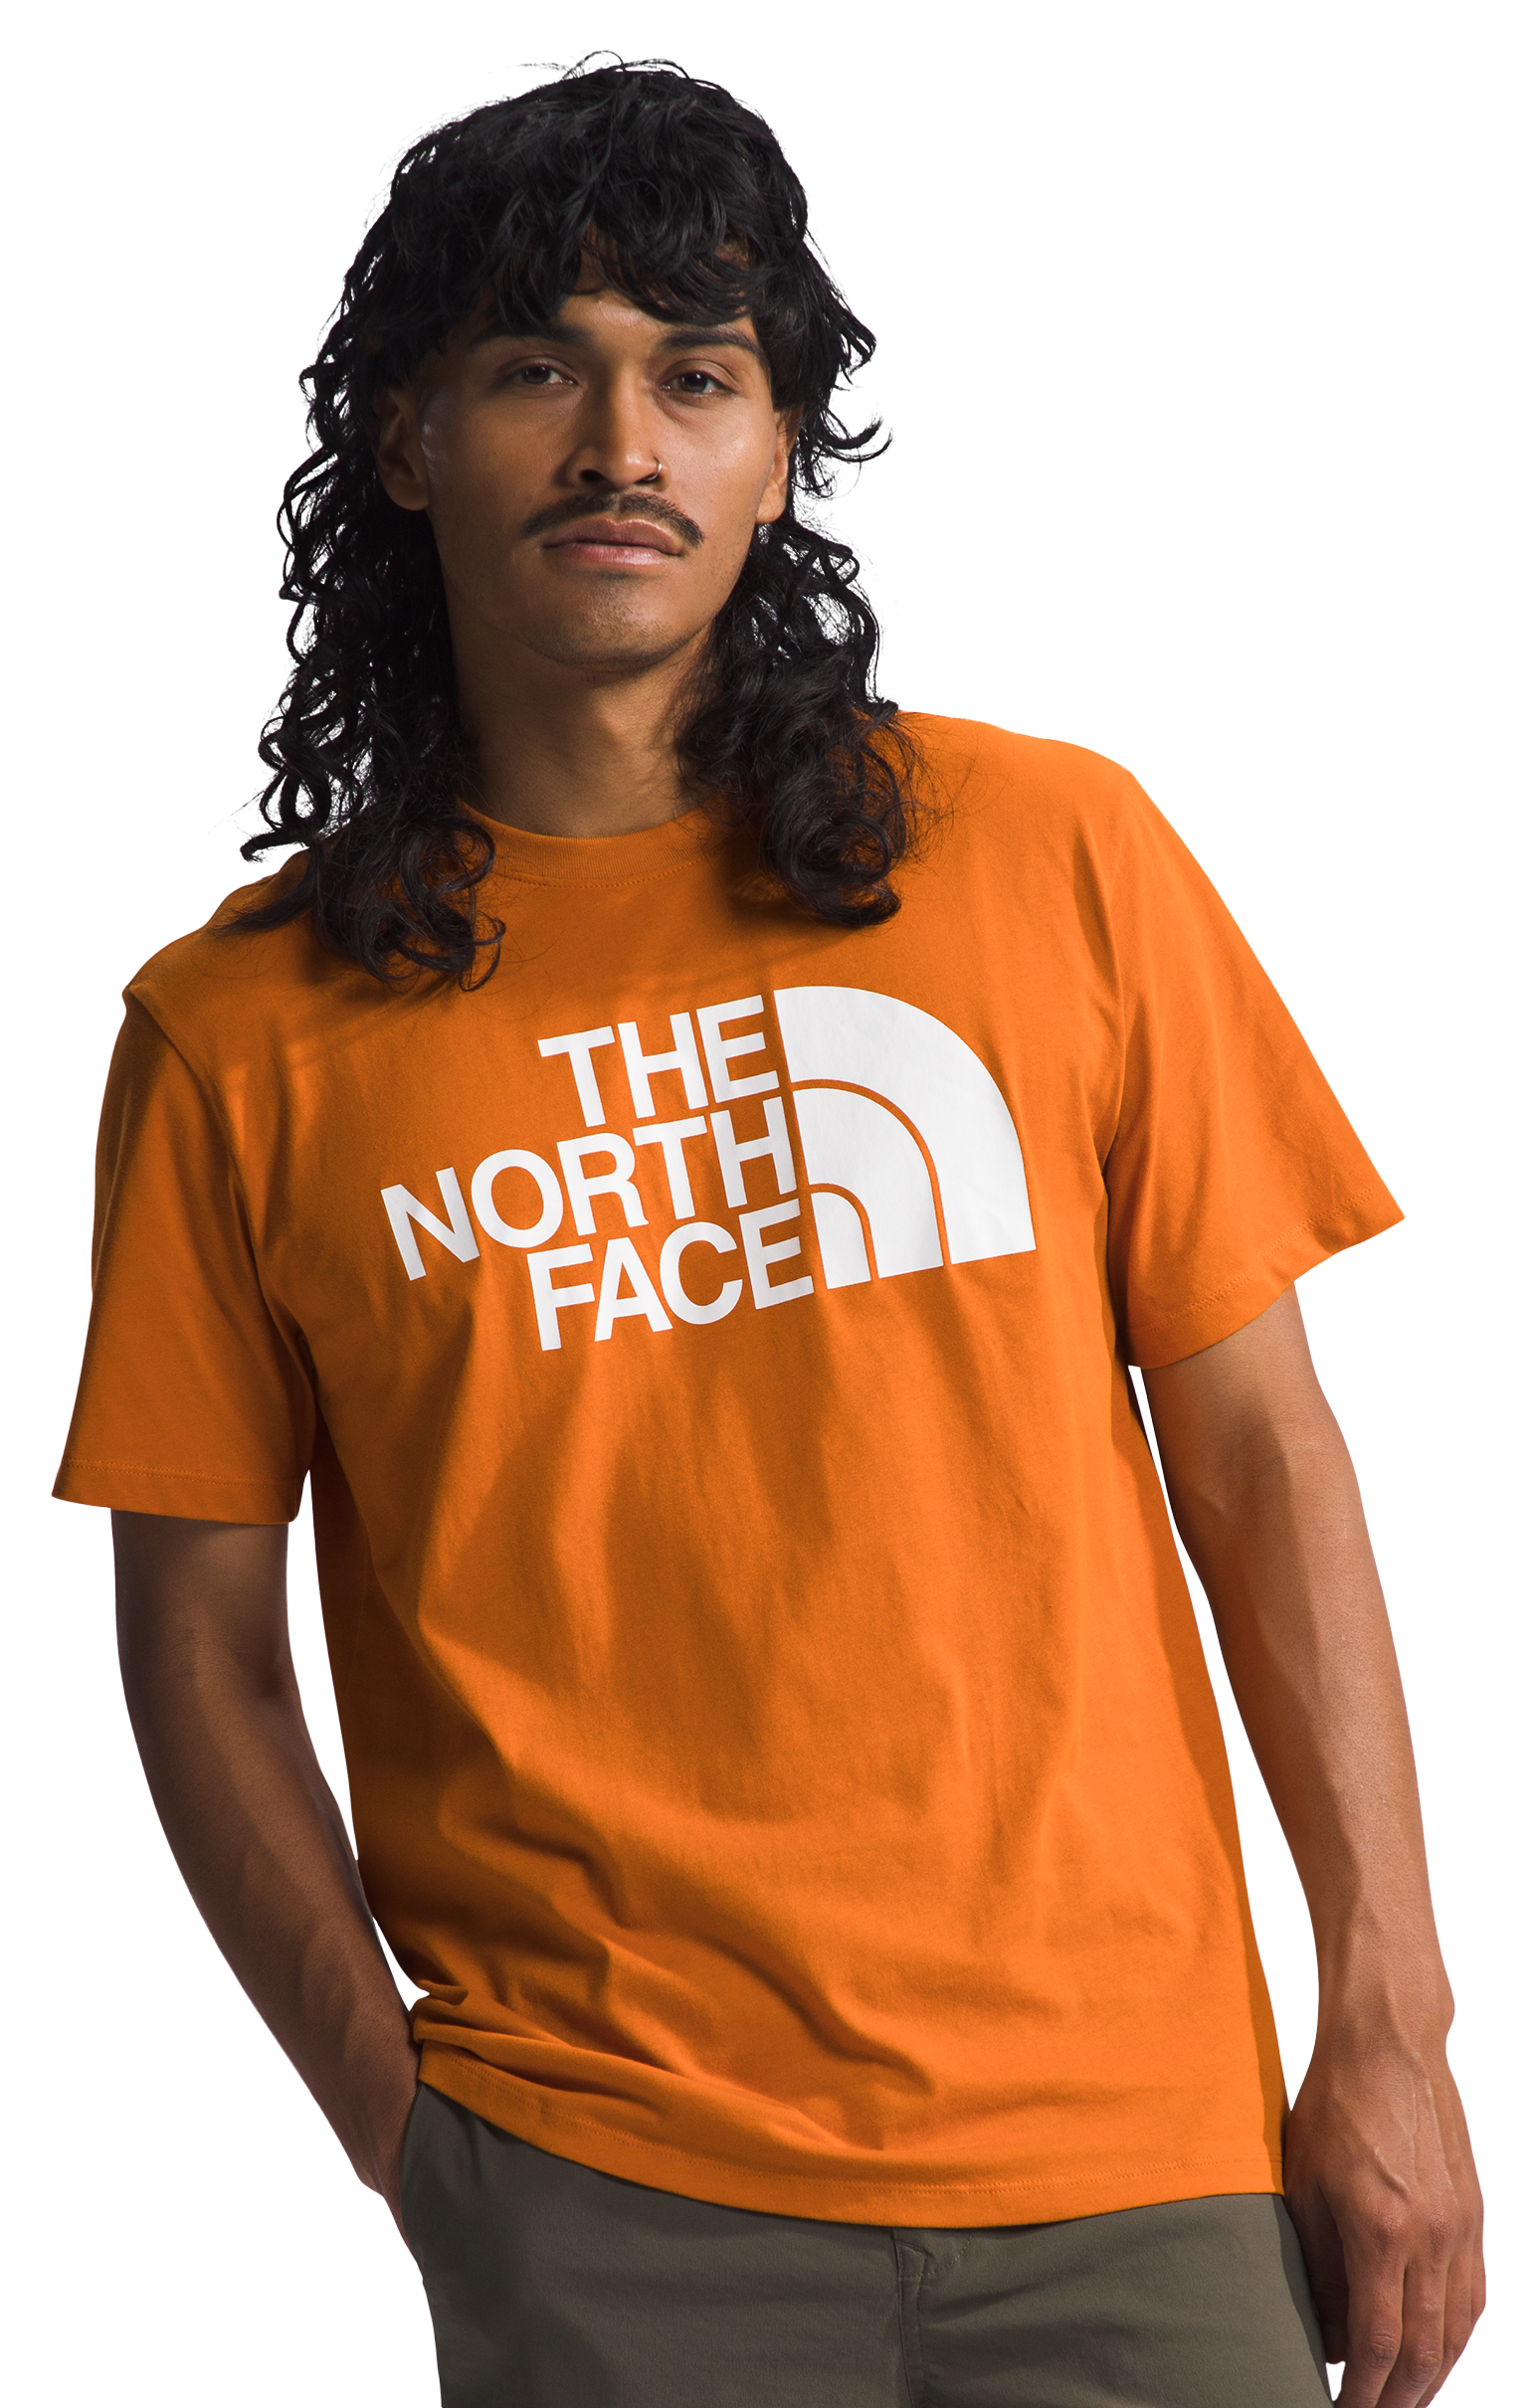 The North Face Half Dome Short-Sleeve T-Shirt - Men's TNF White/TNF Black, XL